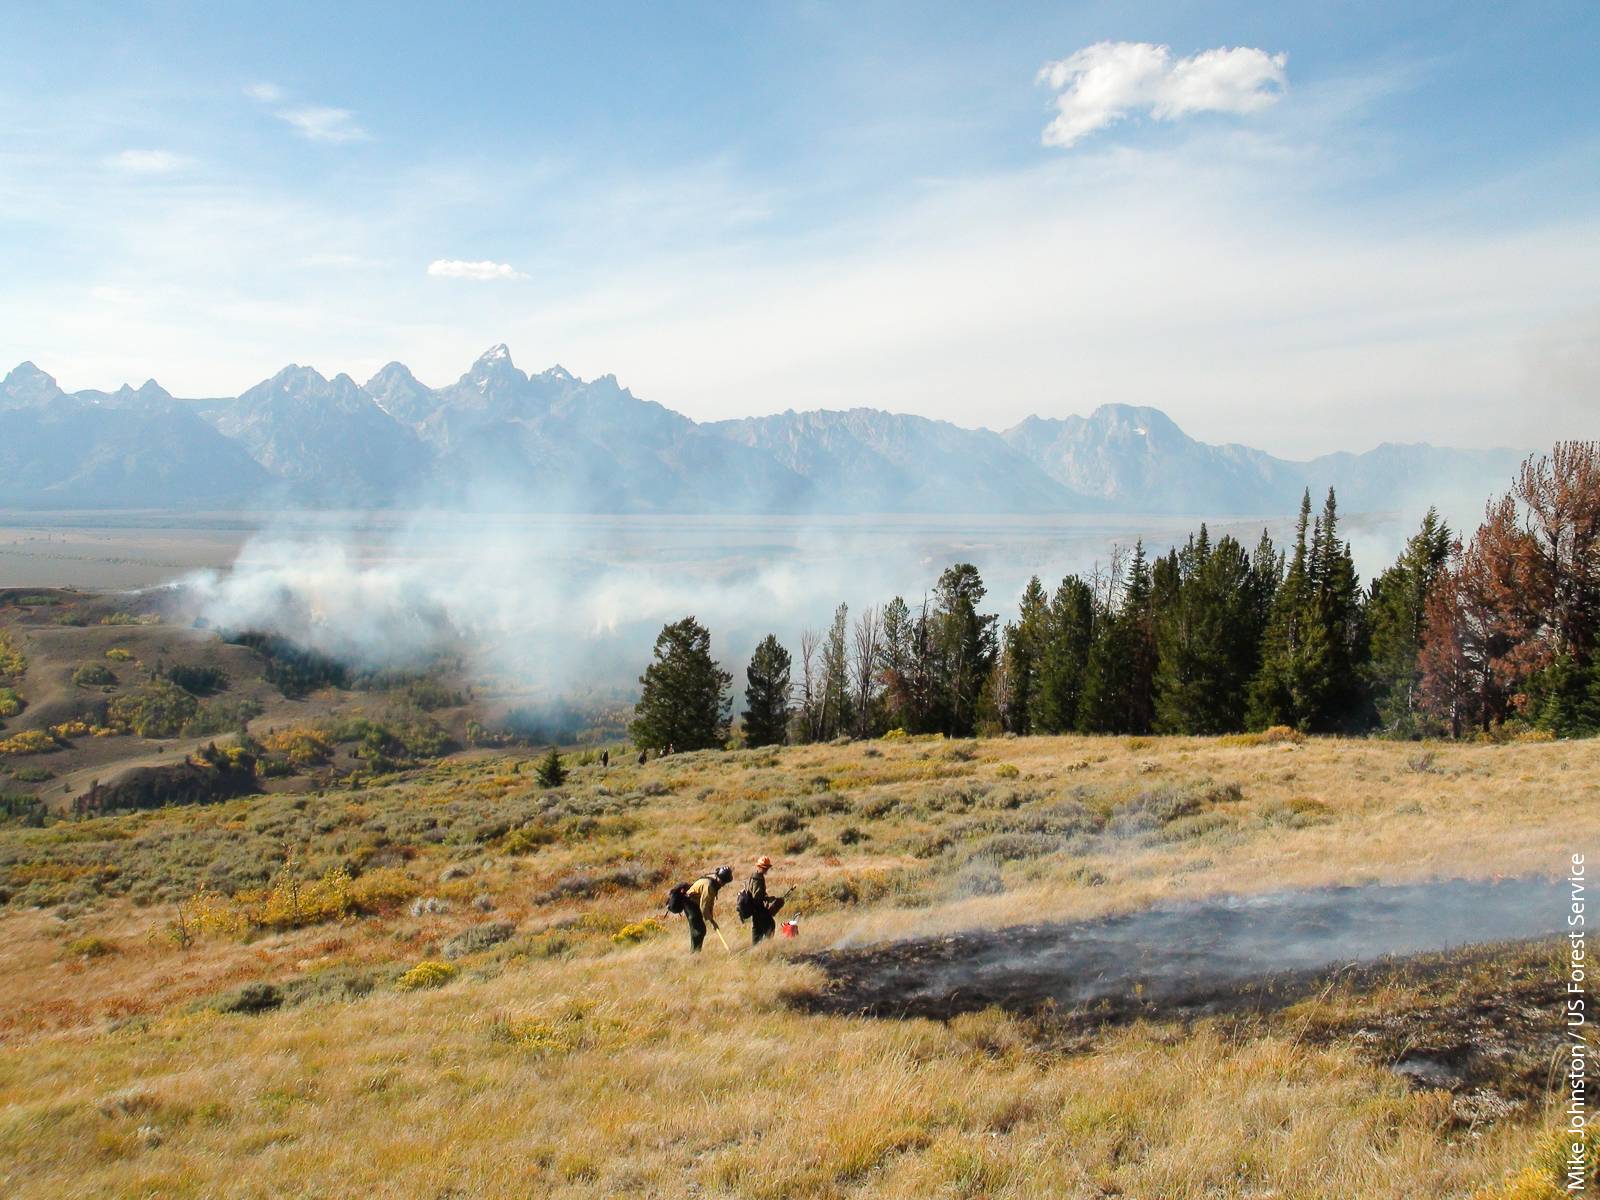 A fire burns a Great Basin sagebrush landscape in Bridger-Teton National Forest, Wyoming, September 18, 2010.